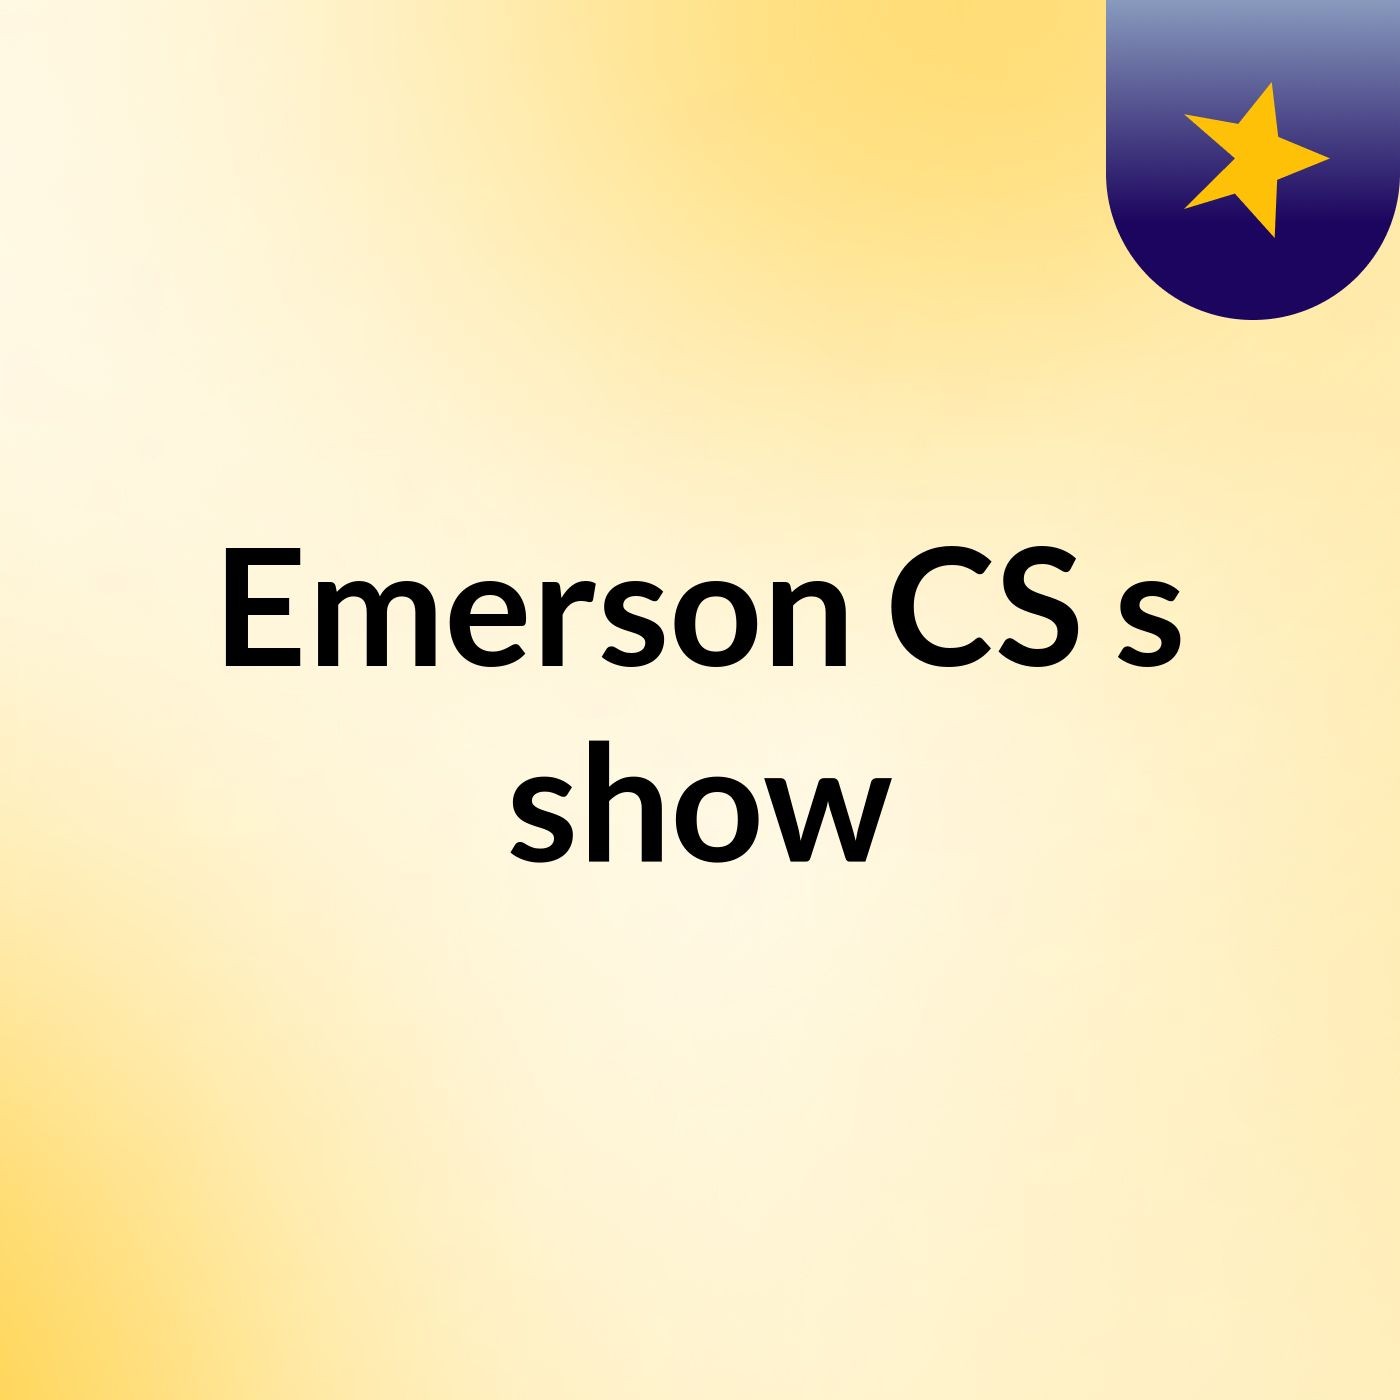 Emerson CS's show